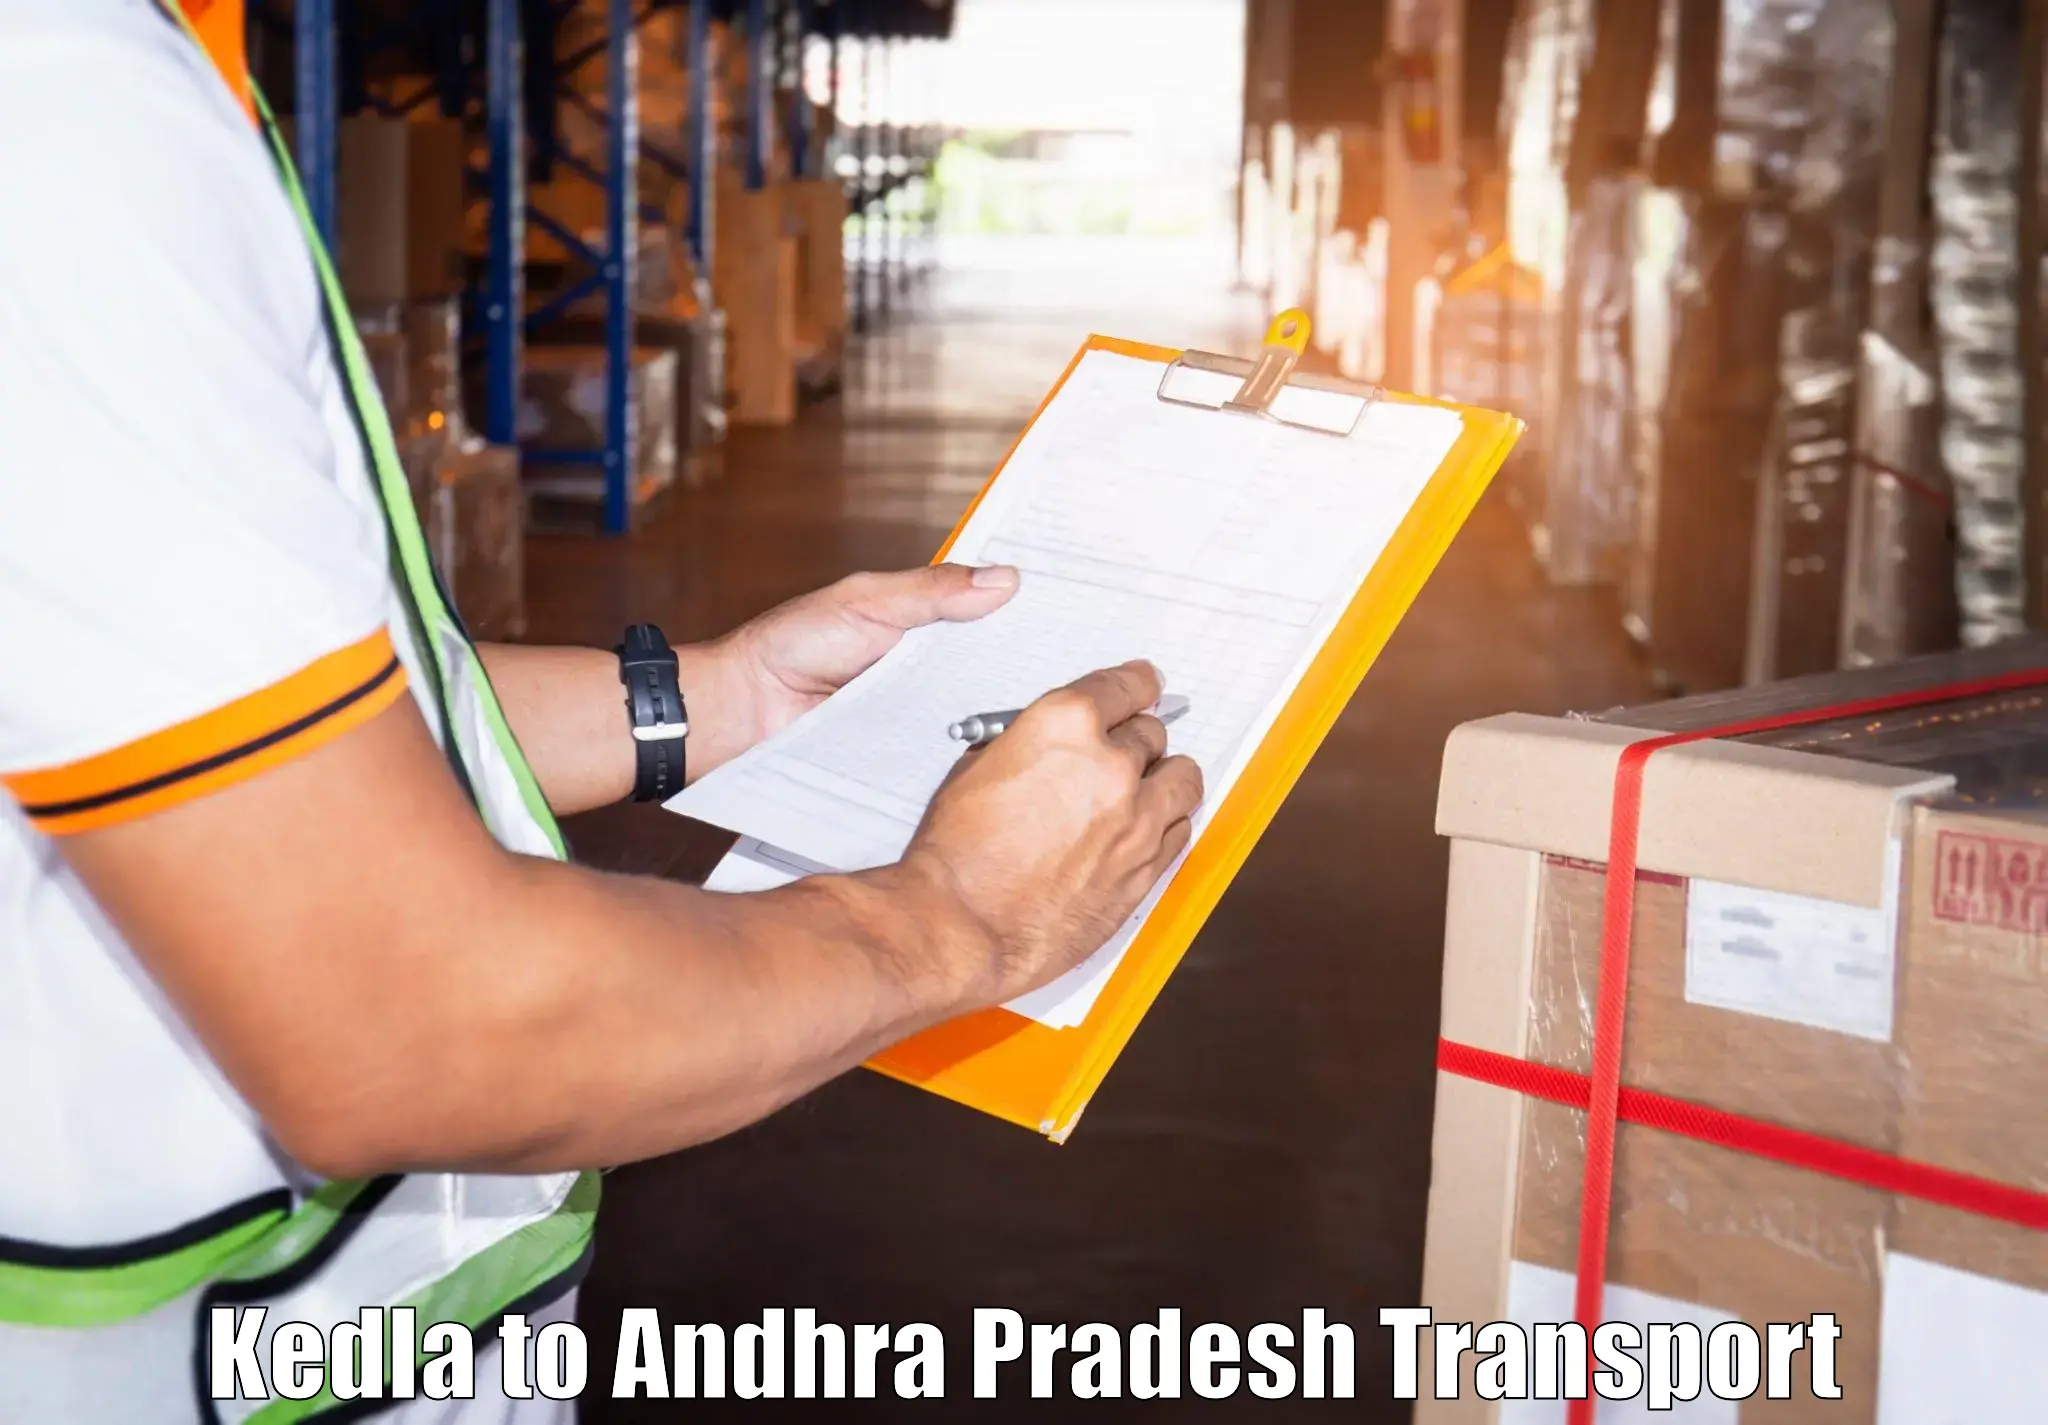 Transport in sharing Kedla to Podalakur